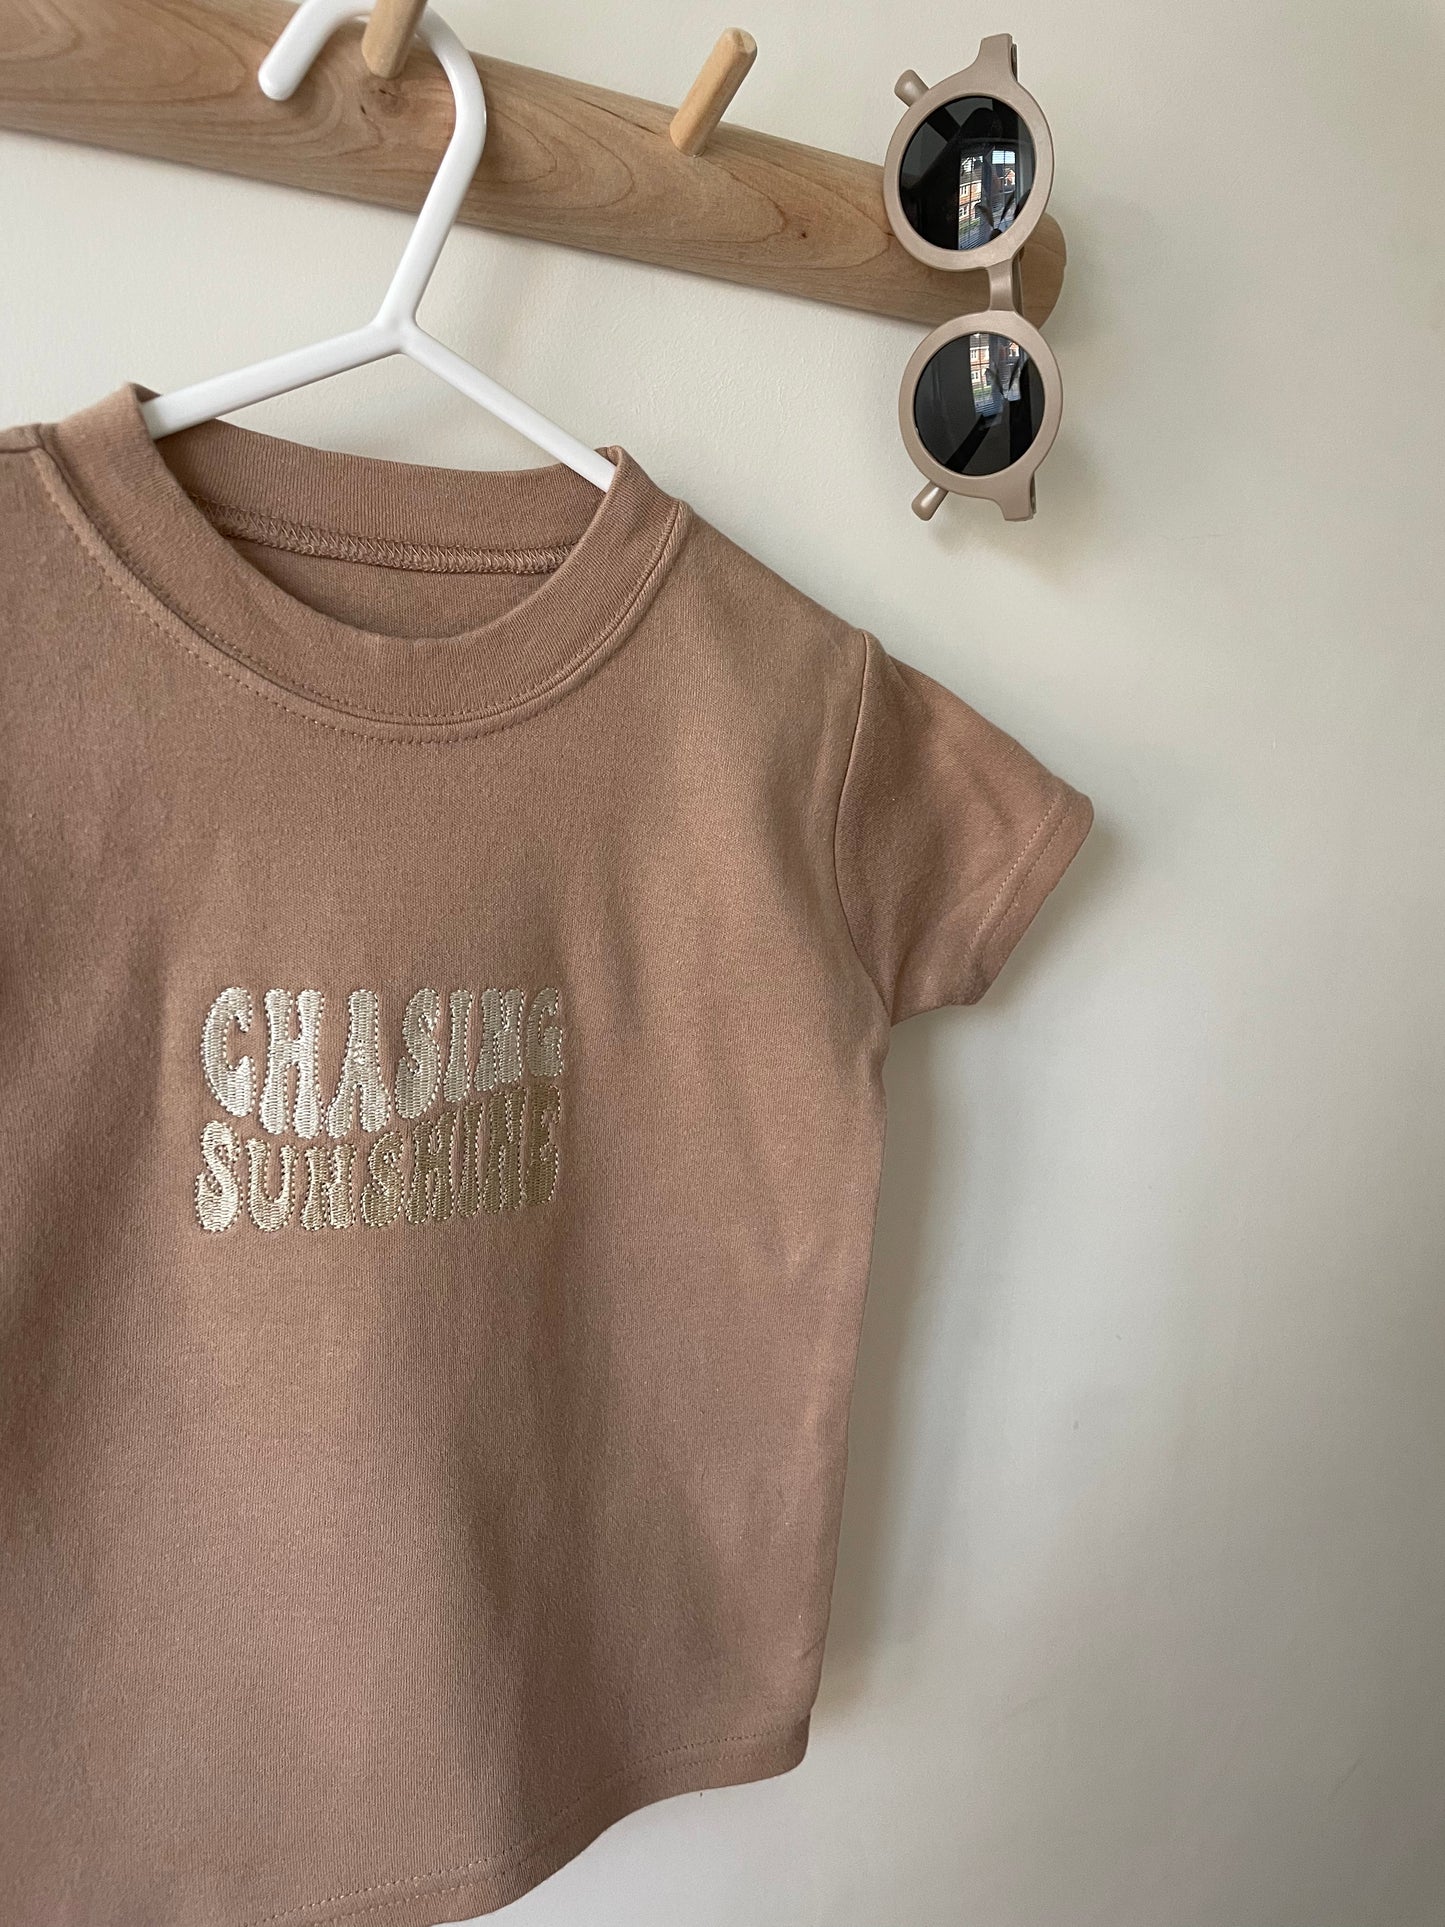 Chasing sunshine t-shirt